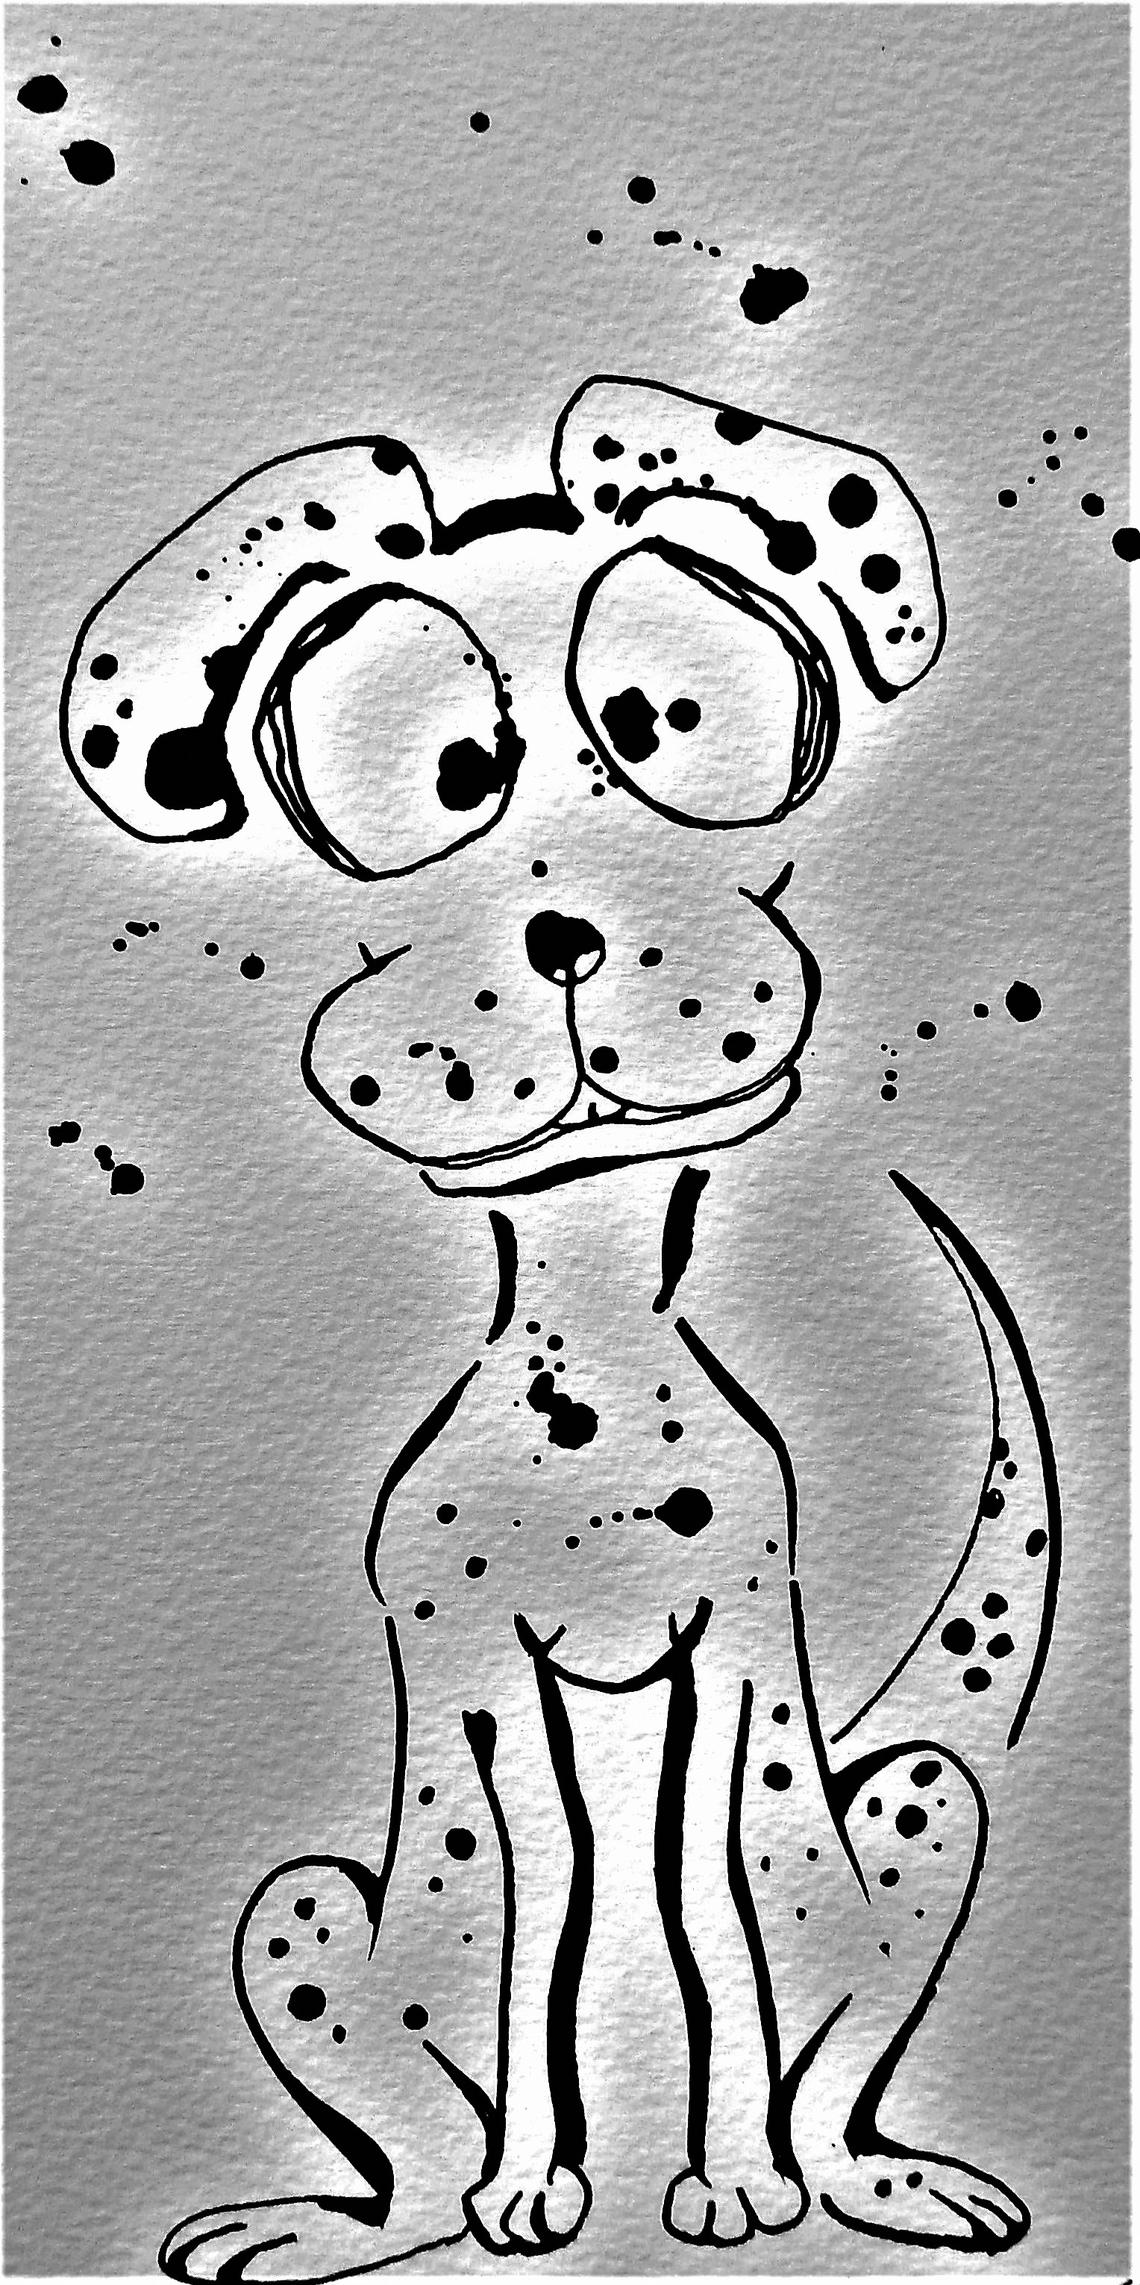 Dotty The Dog - Bath - Time - Cartoon by Pigfish - Cartoonist - Pigfish Cartoons Gallery